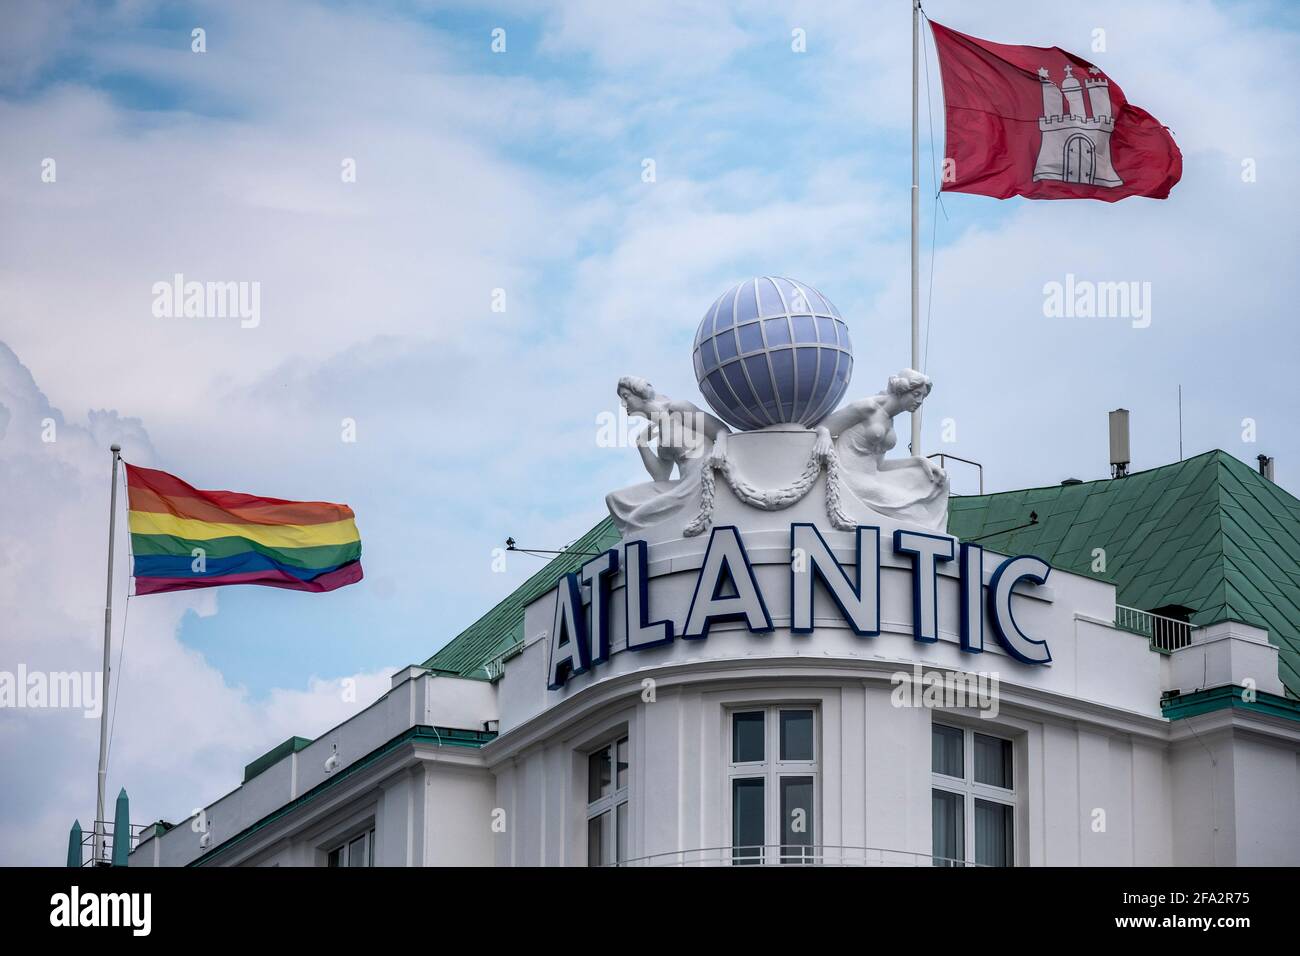 ATLANTIC-Hotel mit Regenbogenflagge und Hamburg-Fahne. Stock Photo